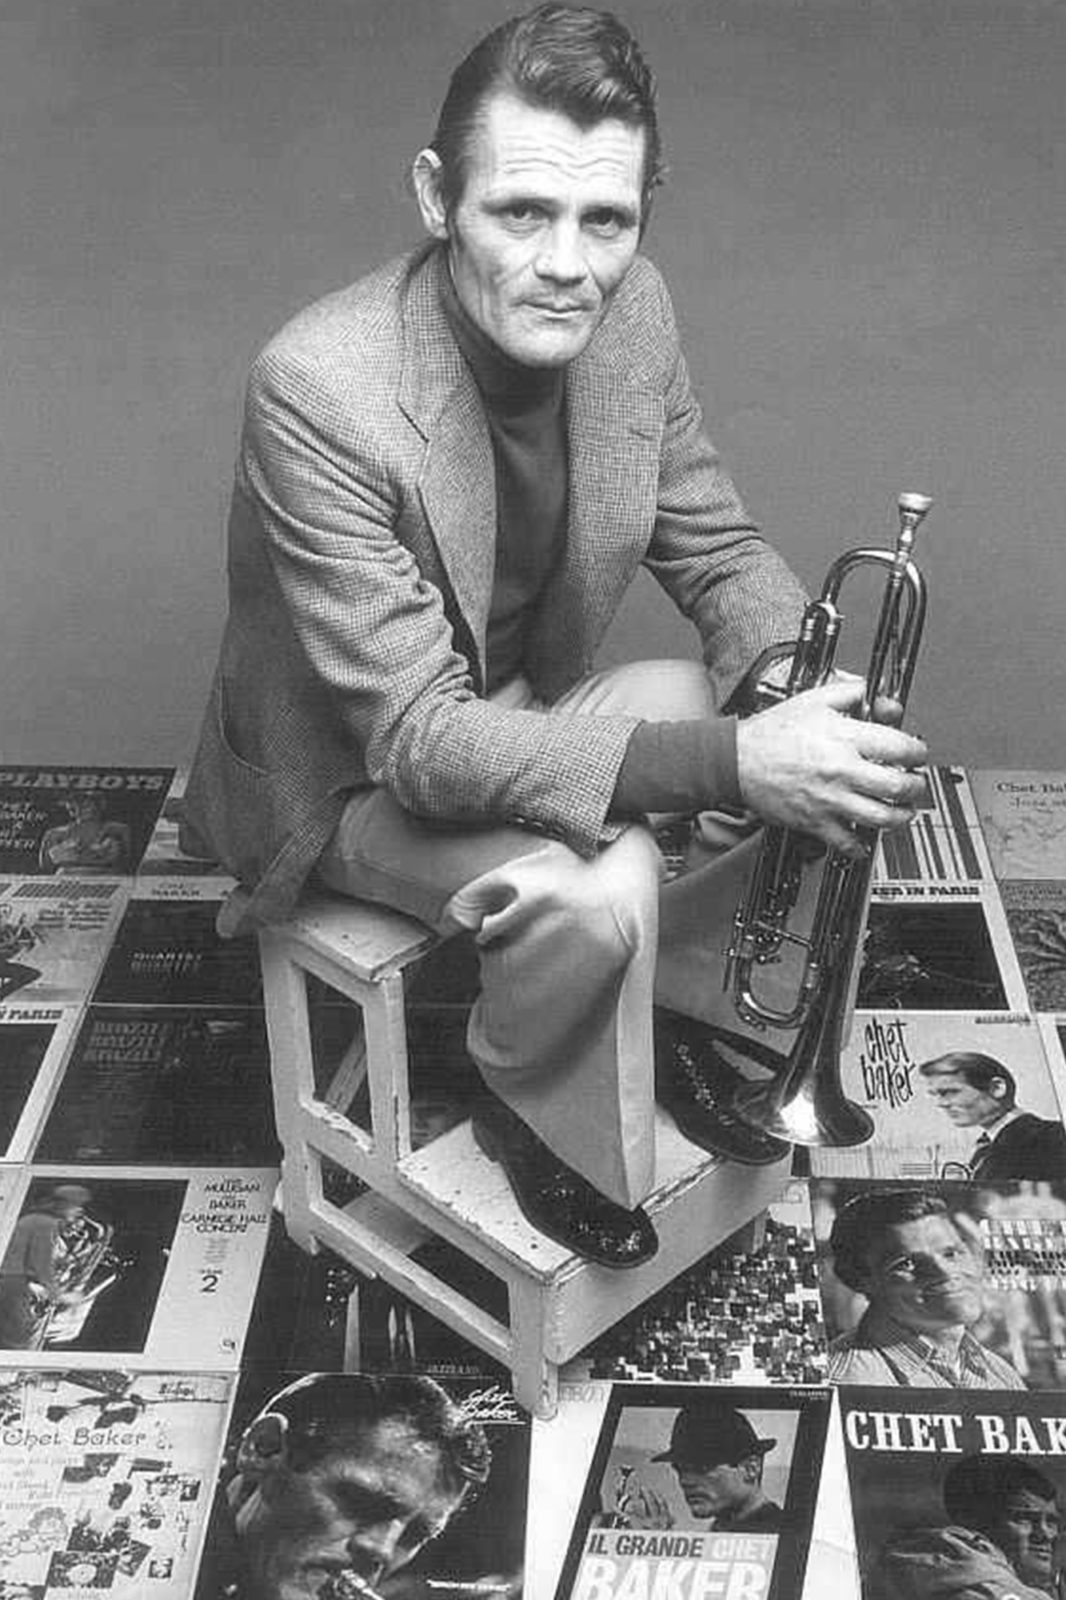 Bill Evans, une icone de style - Chet Baker